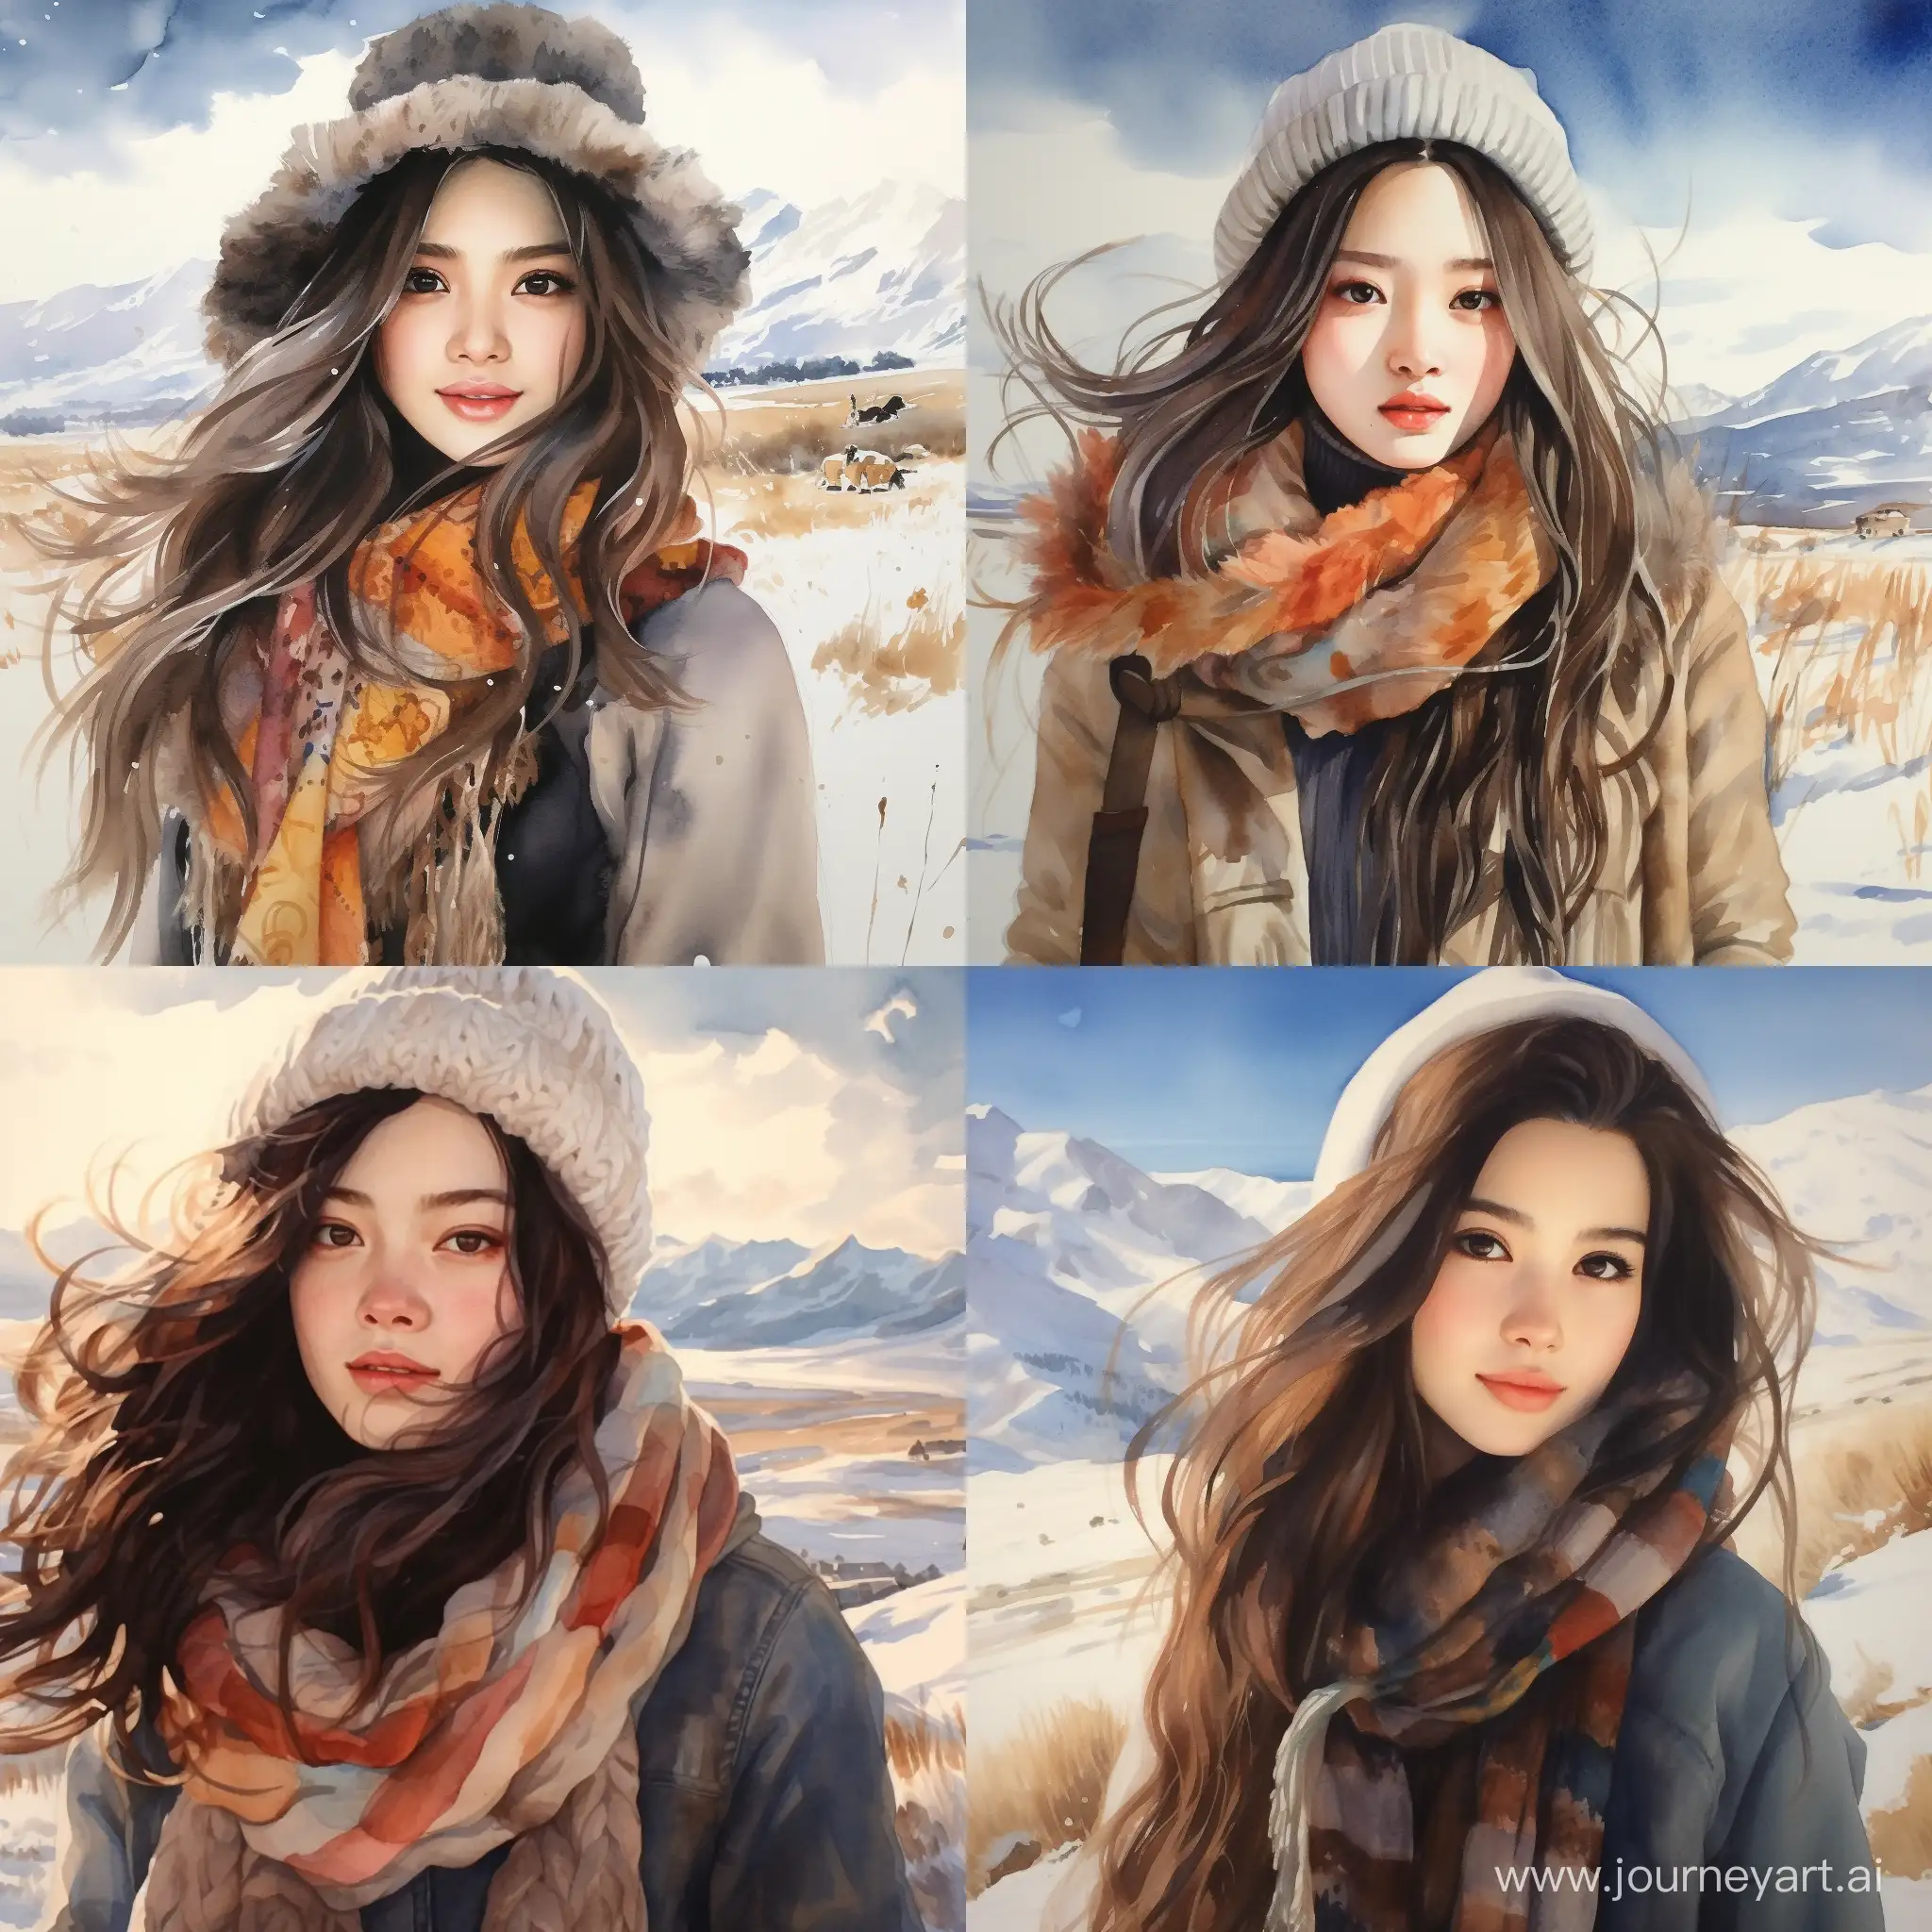 Radiant-Asian-Girl-in-Winter-Steppe-Landscape